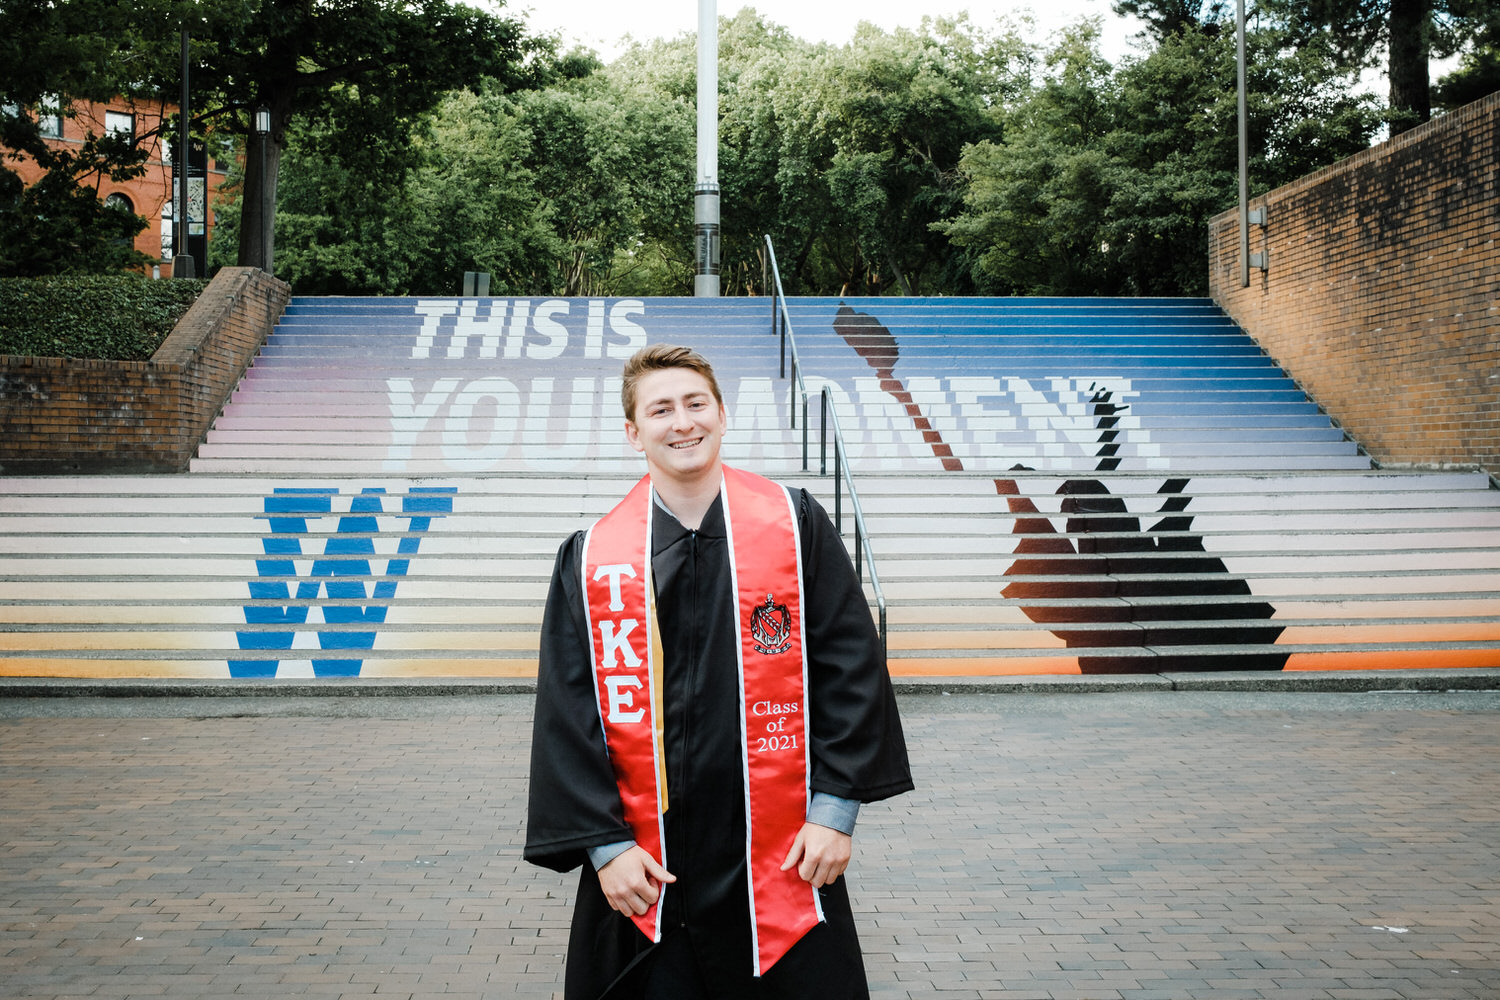 Smiling portrait of UW graduate in front of steps